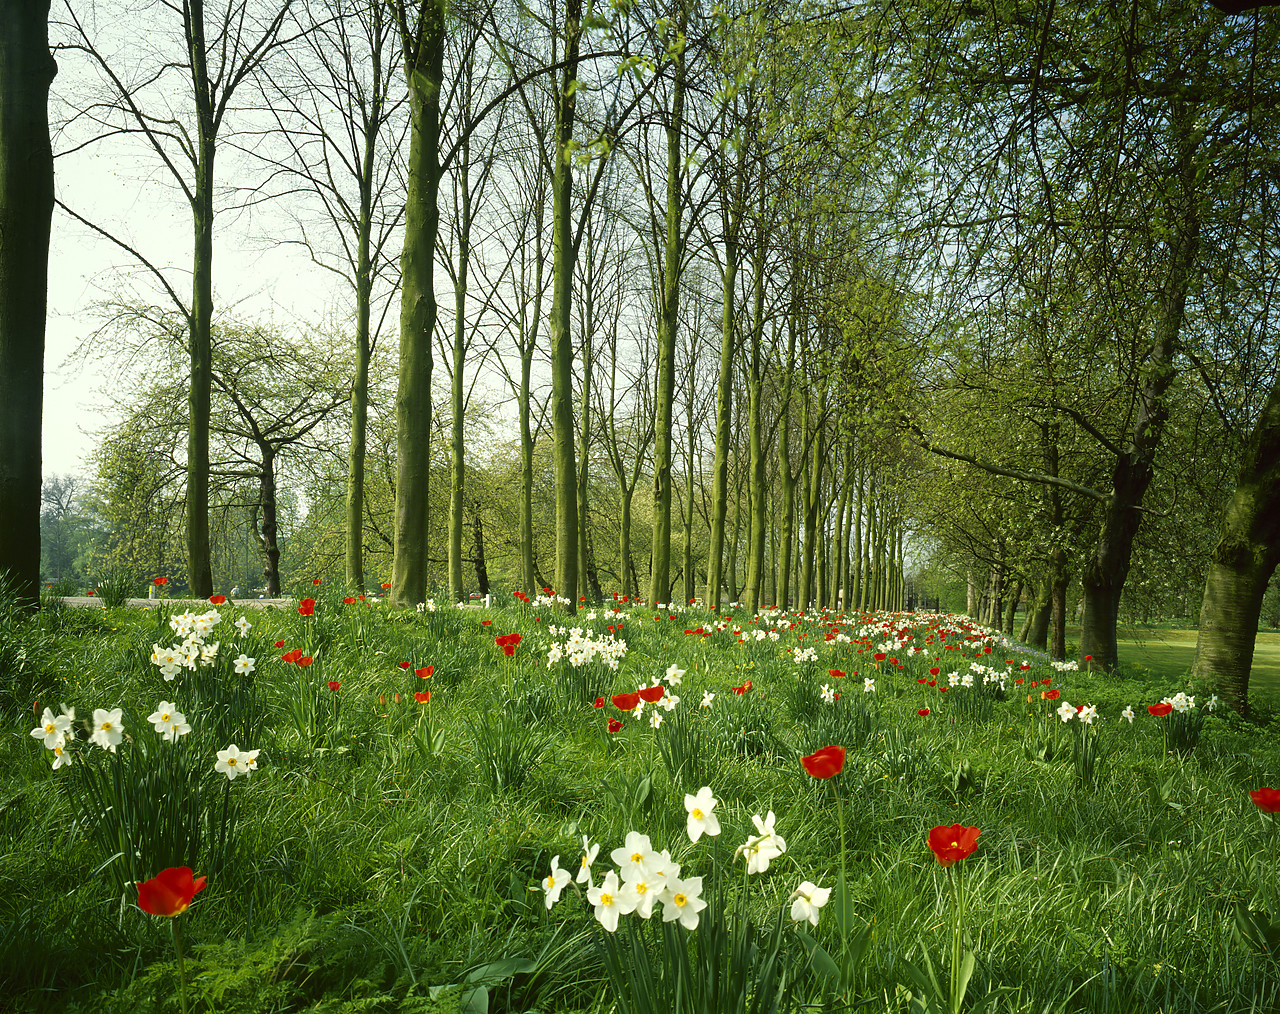 #87866-1 - Parade of Daffodils & Tulips, Cambridge, Cambridgeshire, England